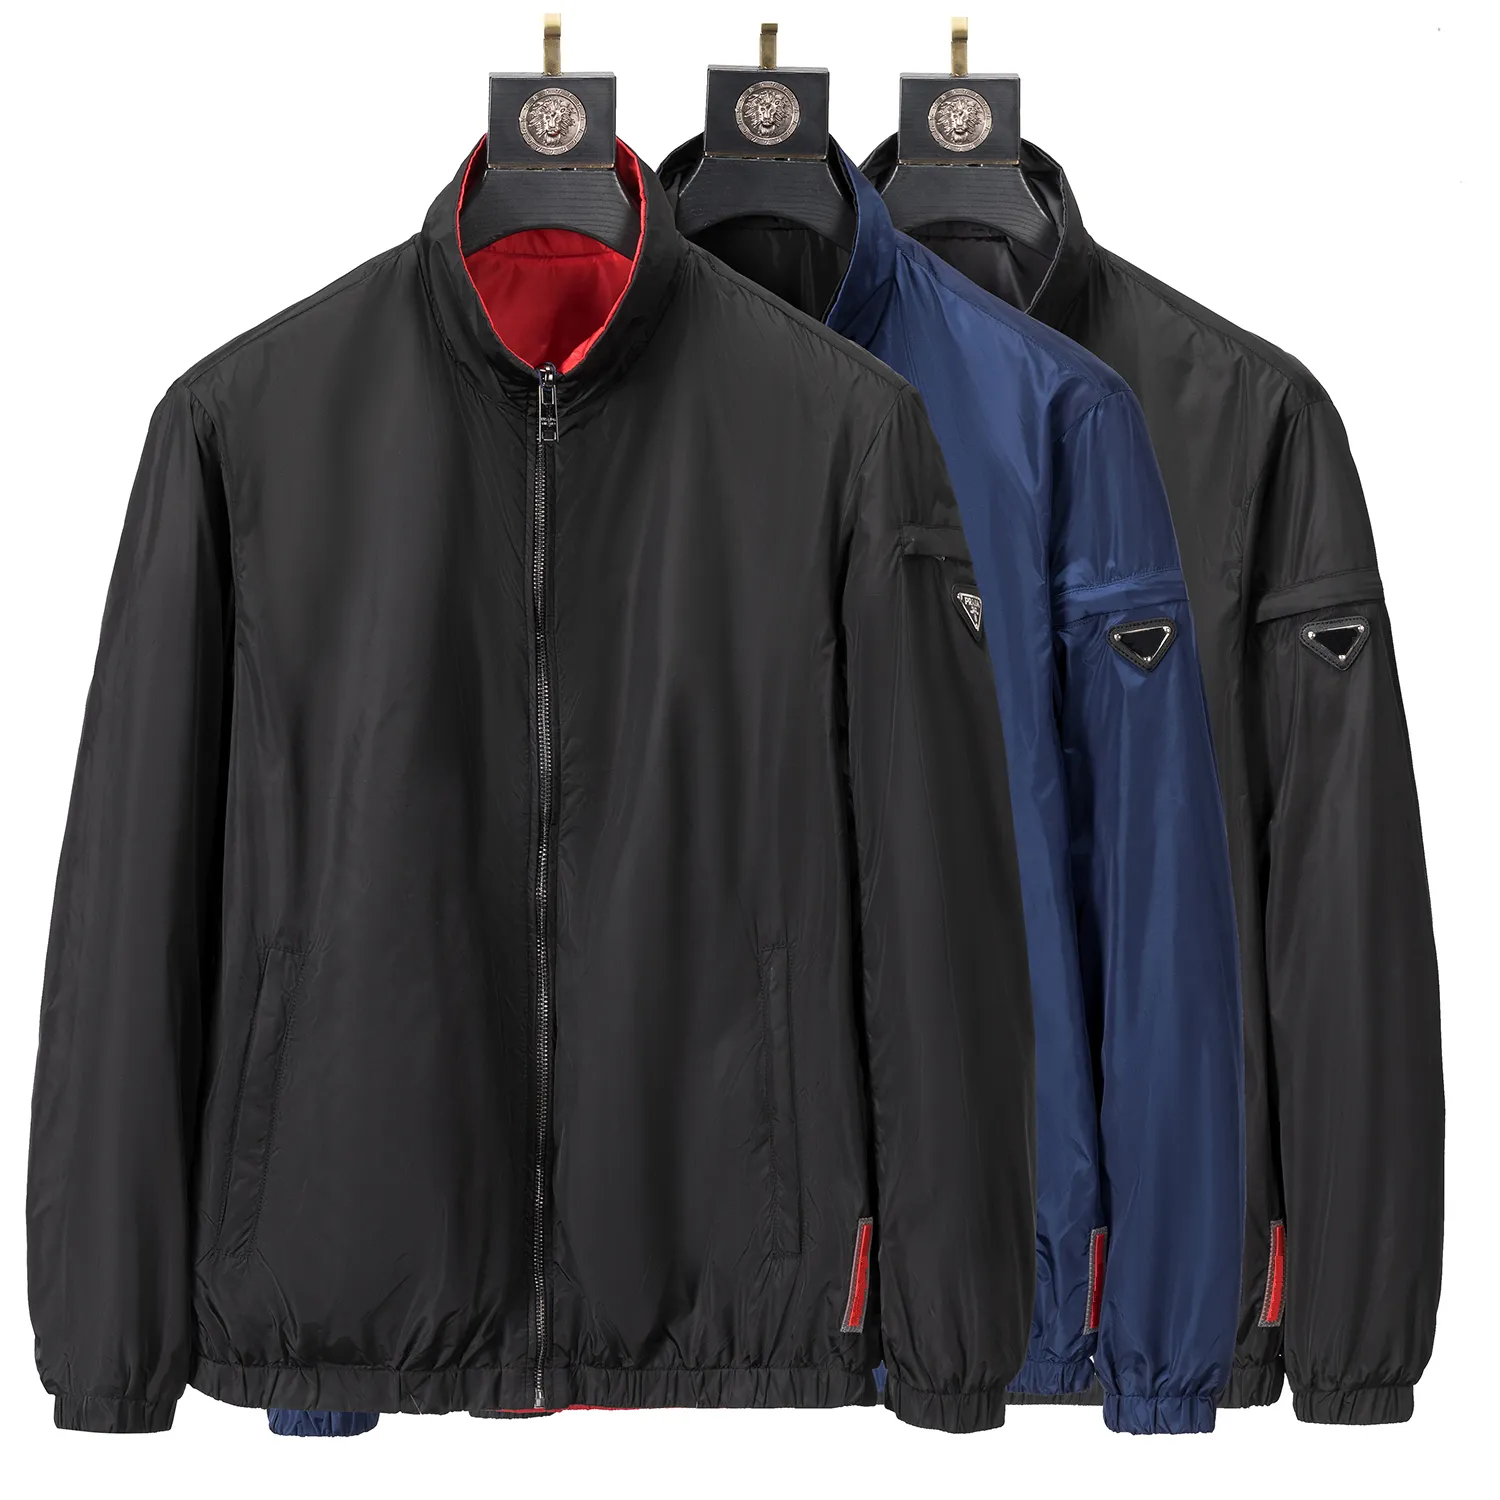 Designers Jacket Coat Men Jackets Jackets de inverno Jaqueta masculina de alta qualidade Soft Smooth Moda Jackets Prints Carta Bordado Tamanho do Strotwear M-XXXL